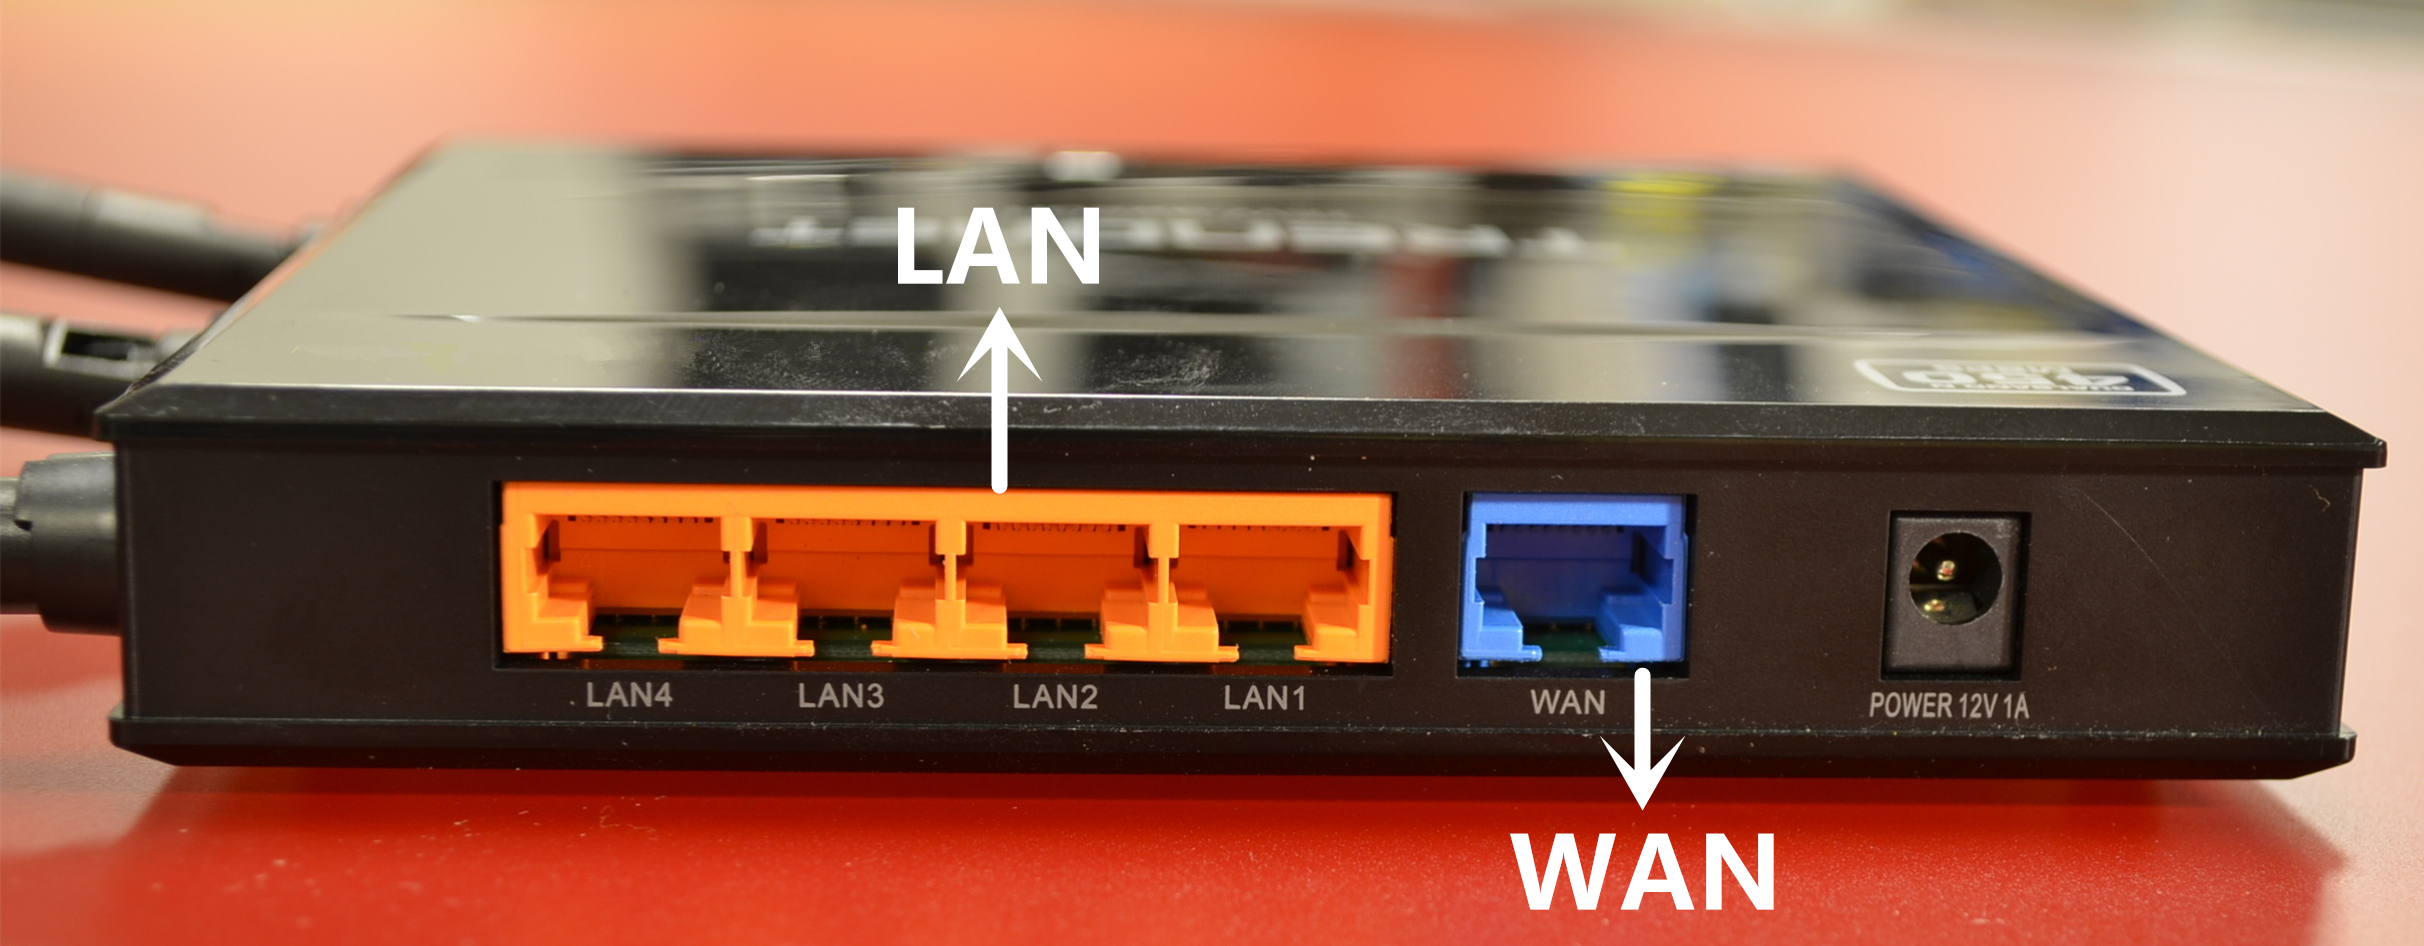 Computer Networks Comparison Between LAN & WAN - Fiber Cabling Solution